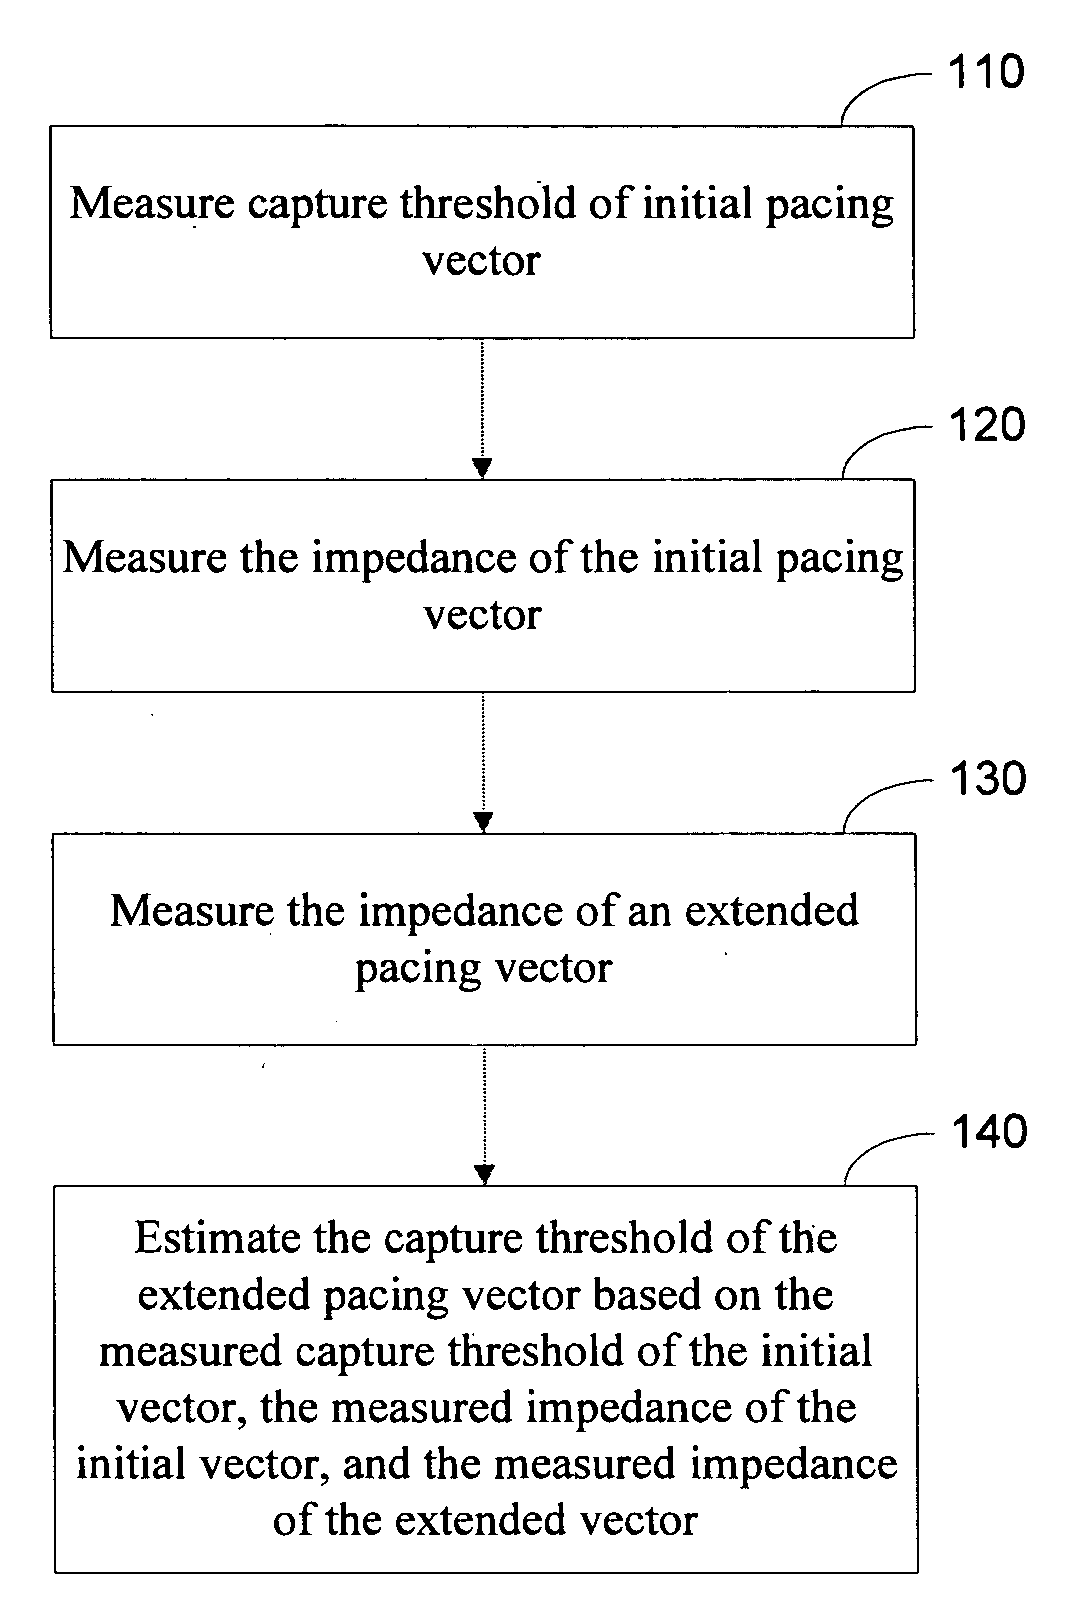 Capture threshold estimation for alternate pacing vectors